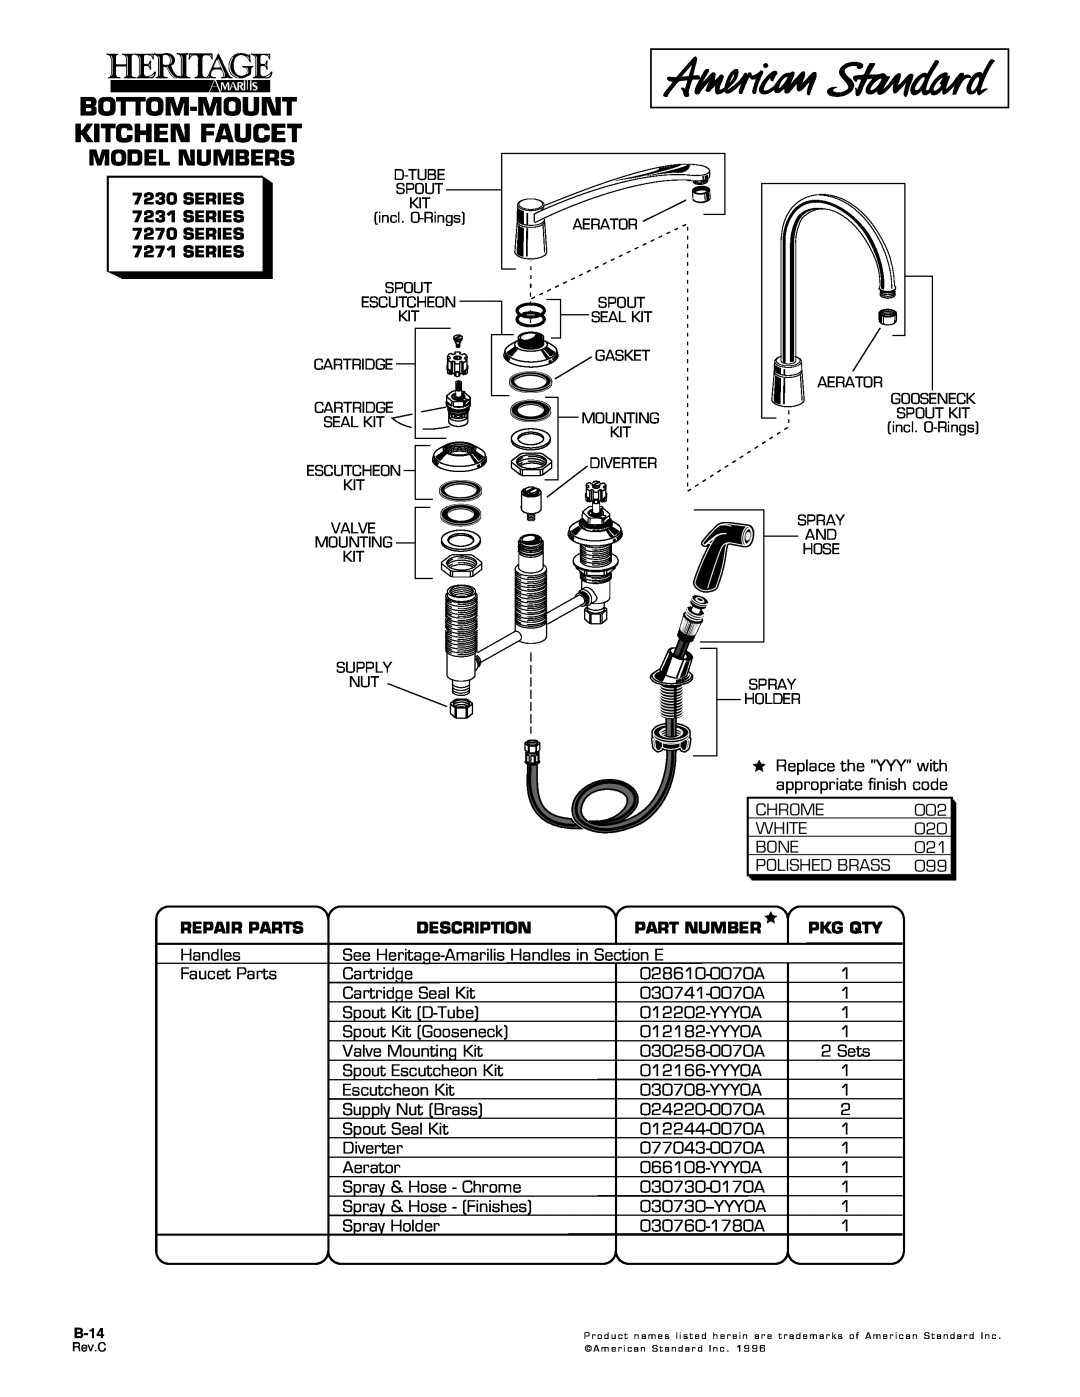 American Standard 7270 Series manual Bottom-Mount Kitchen Faucet, Model Numbers, Repair Parts, Description, Part Number 